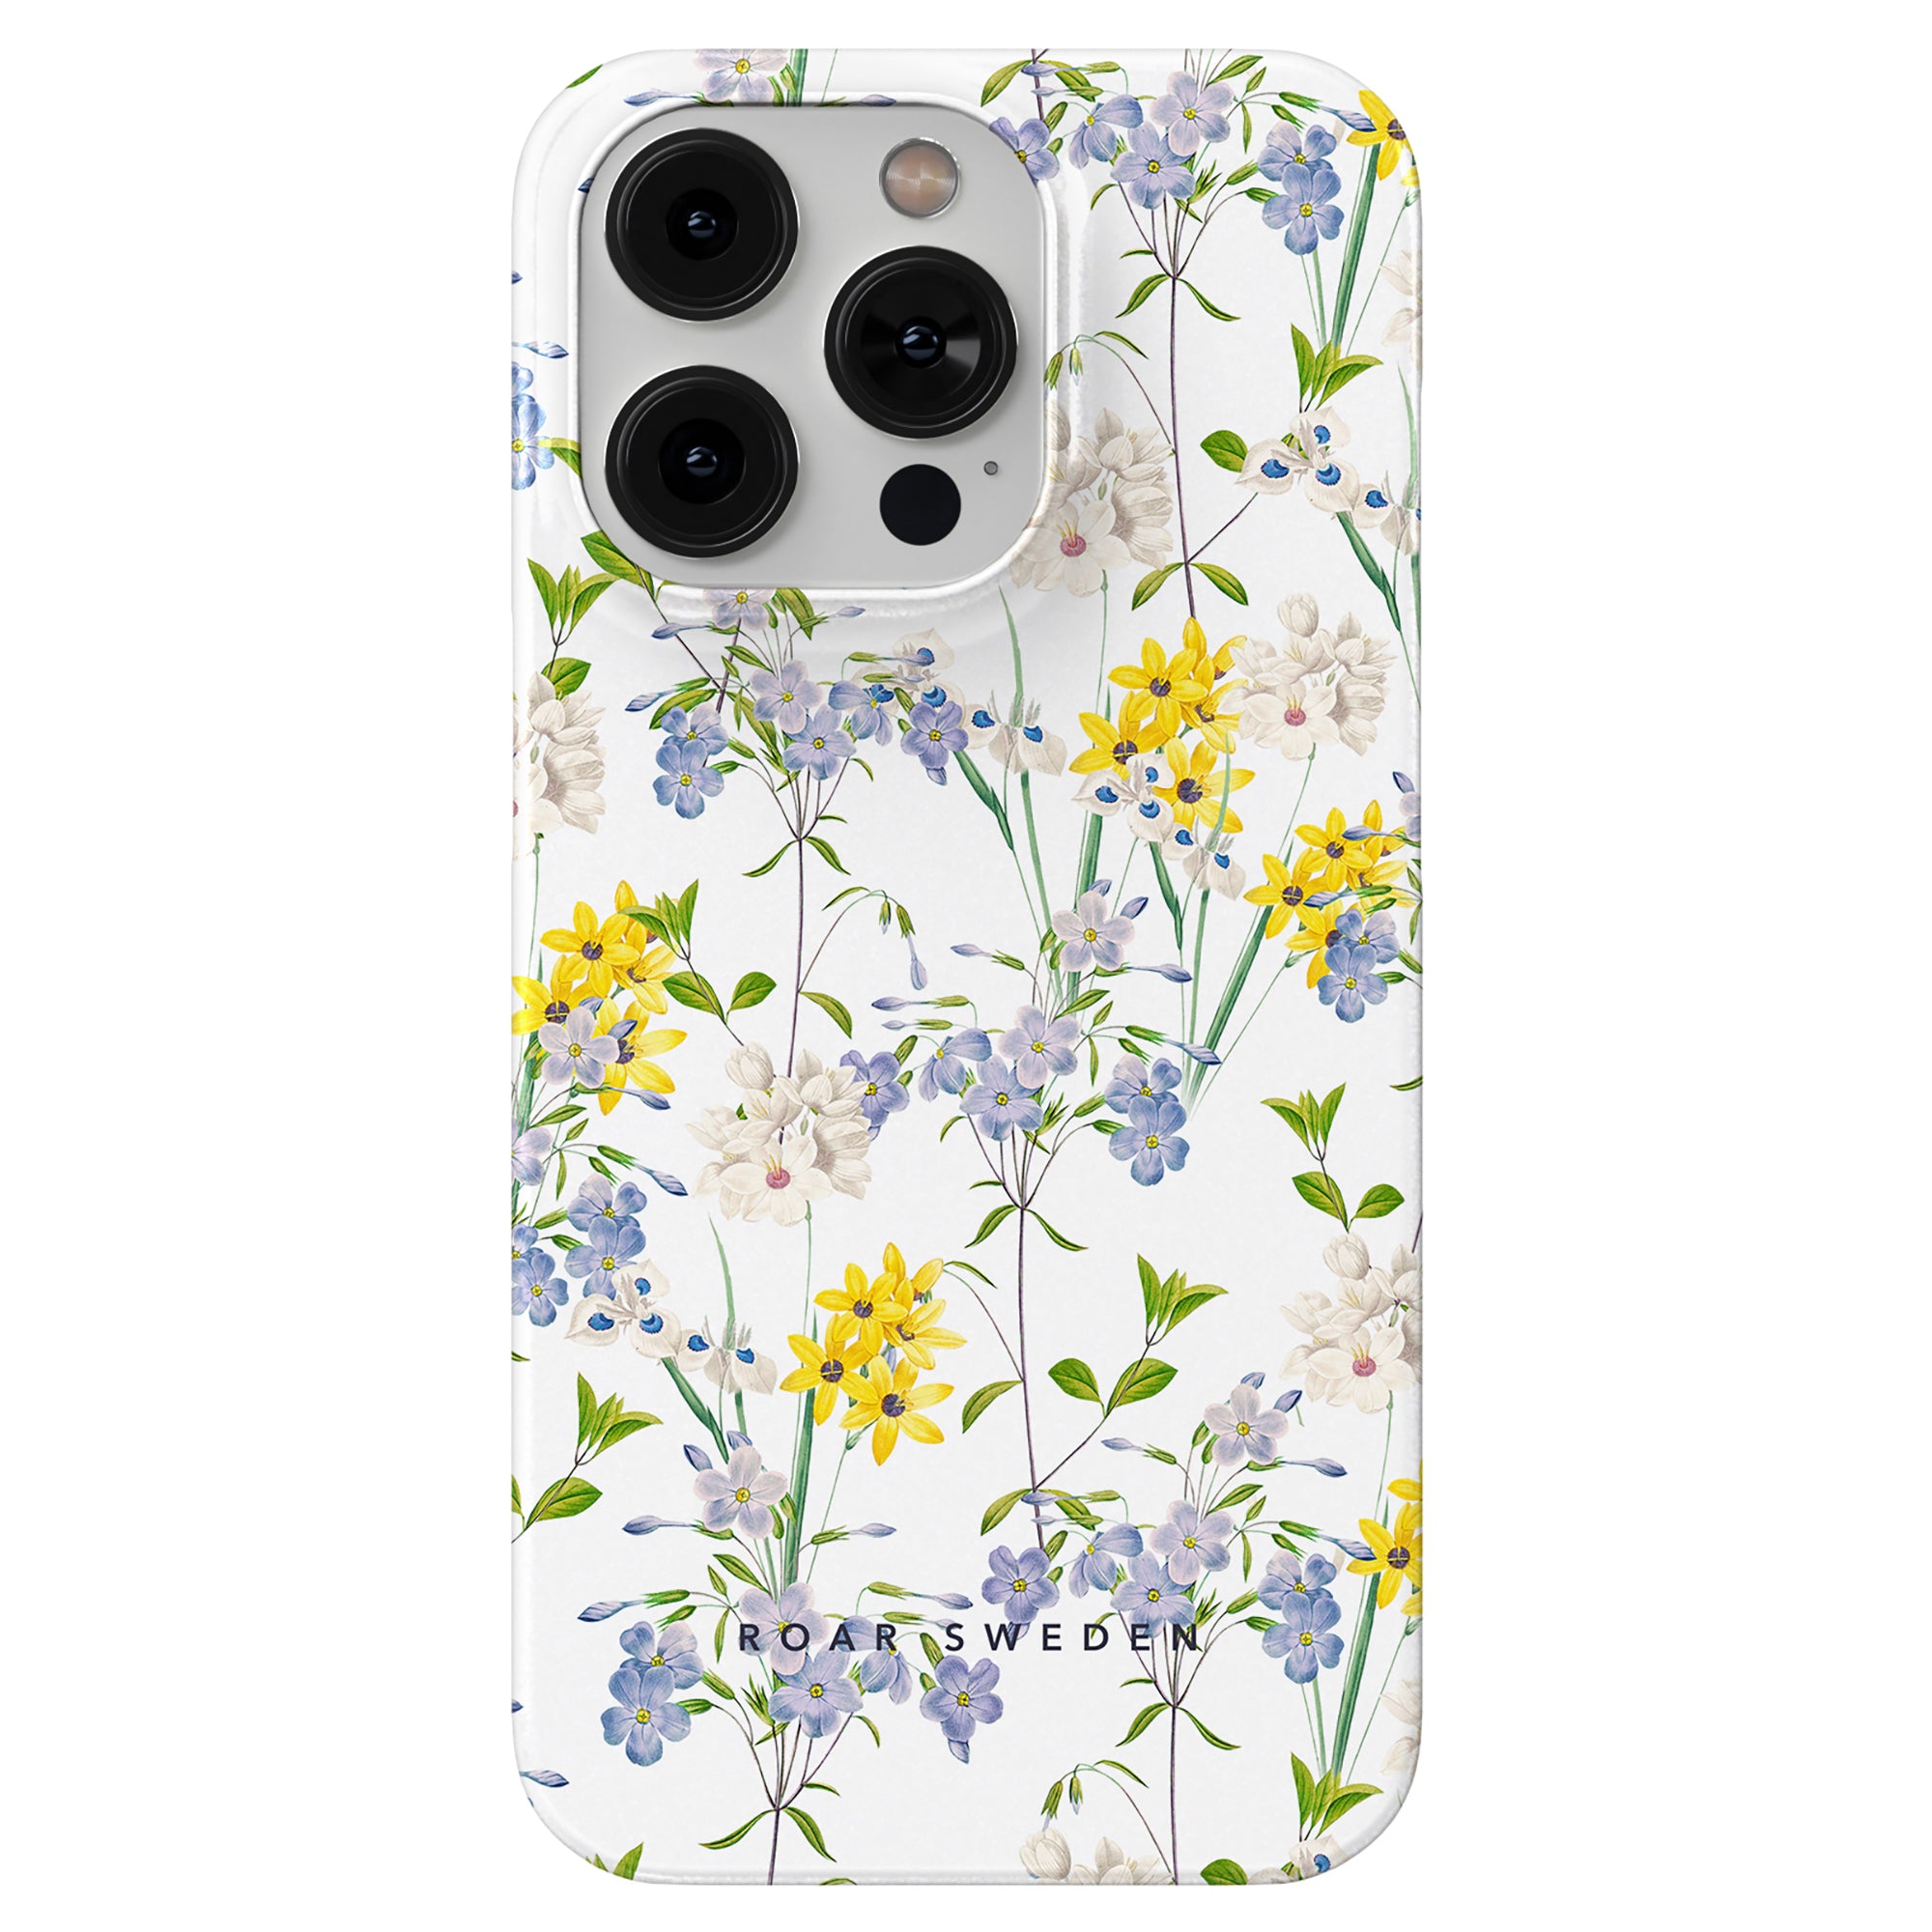 Summer Flowers - Slim case, waterproof smartphone case with dual camera cutouts.